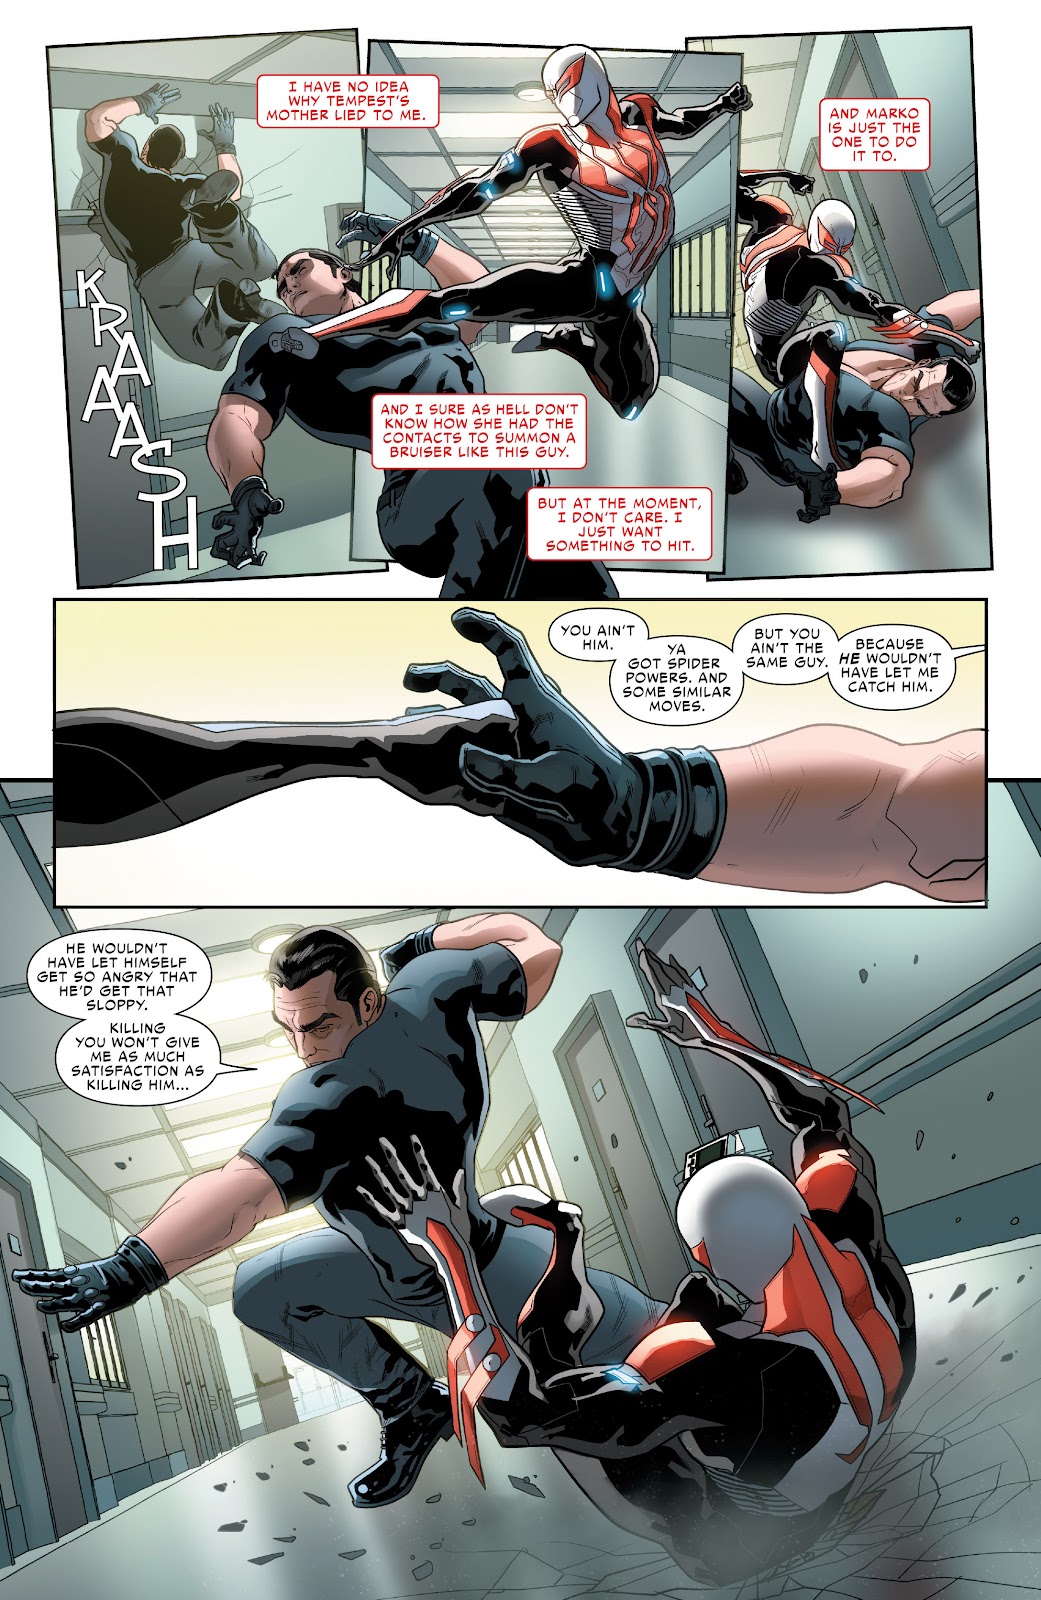 Spider-Man 2099 (2015) issue 8 - Page 17